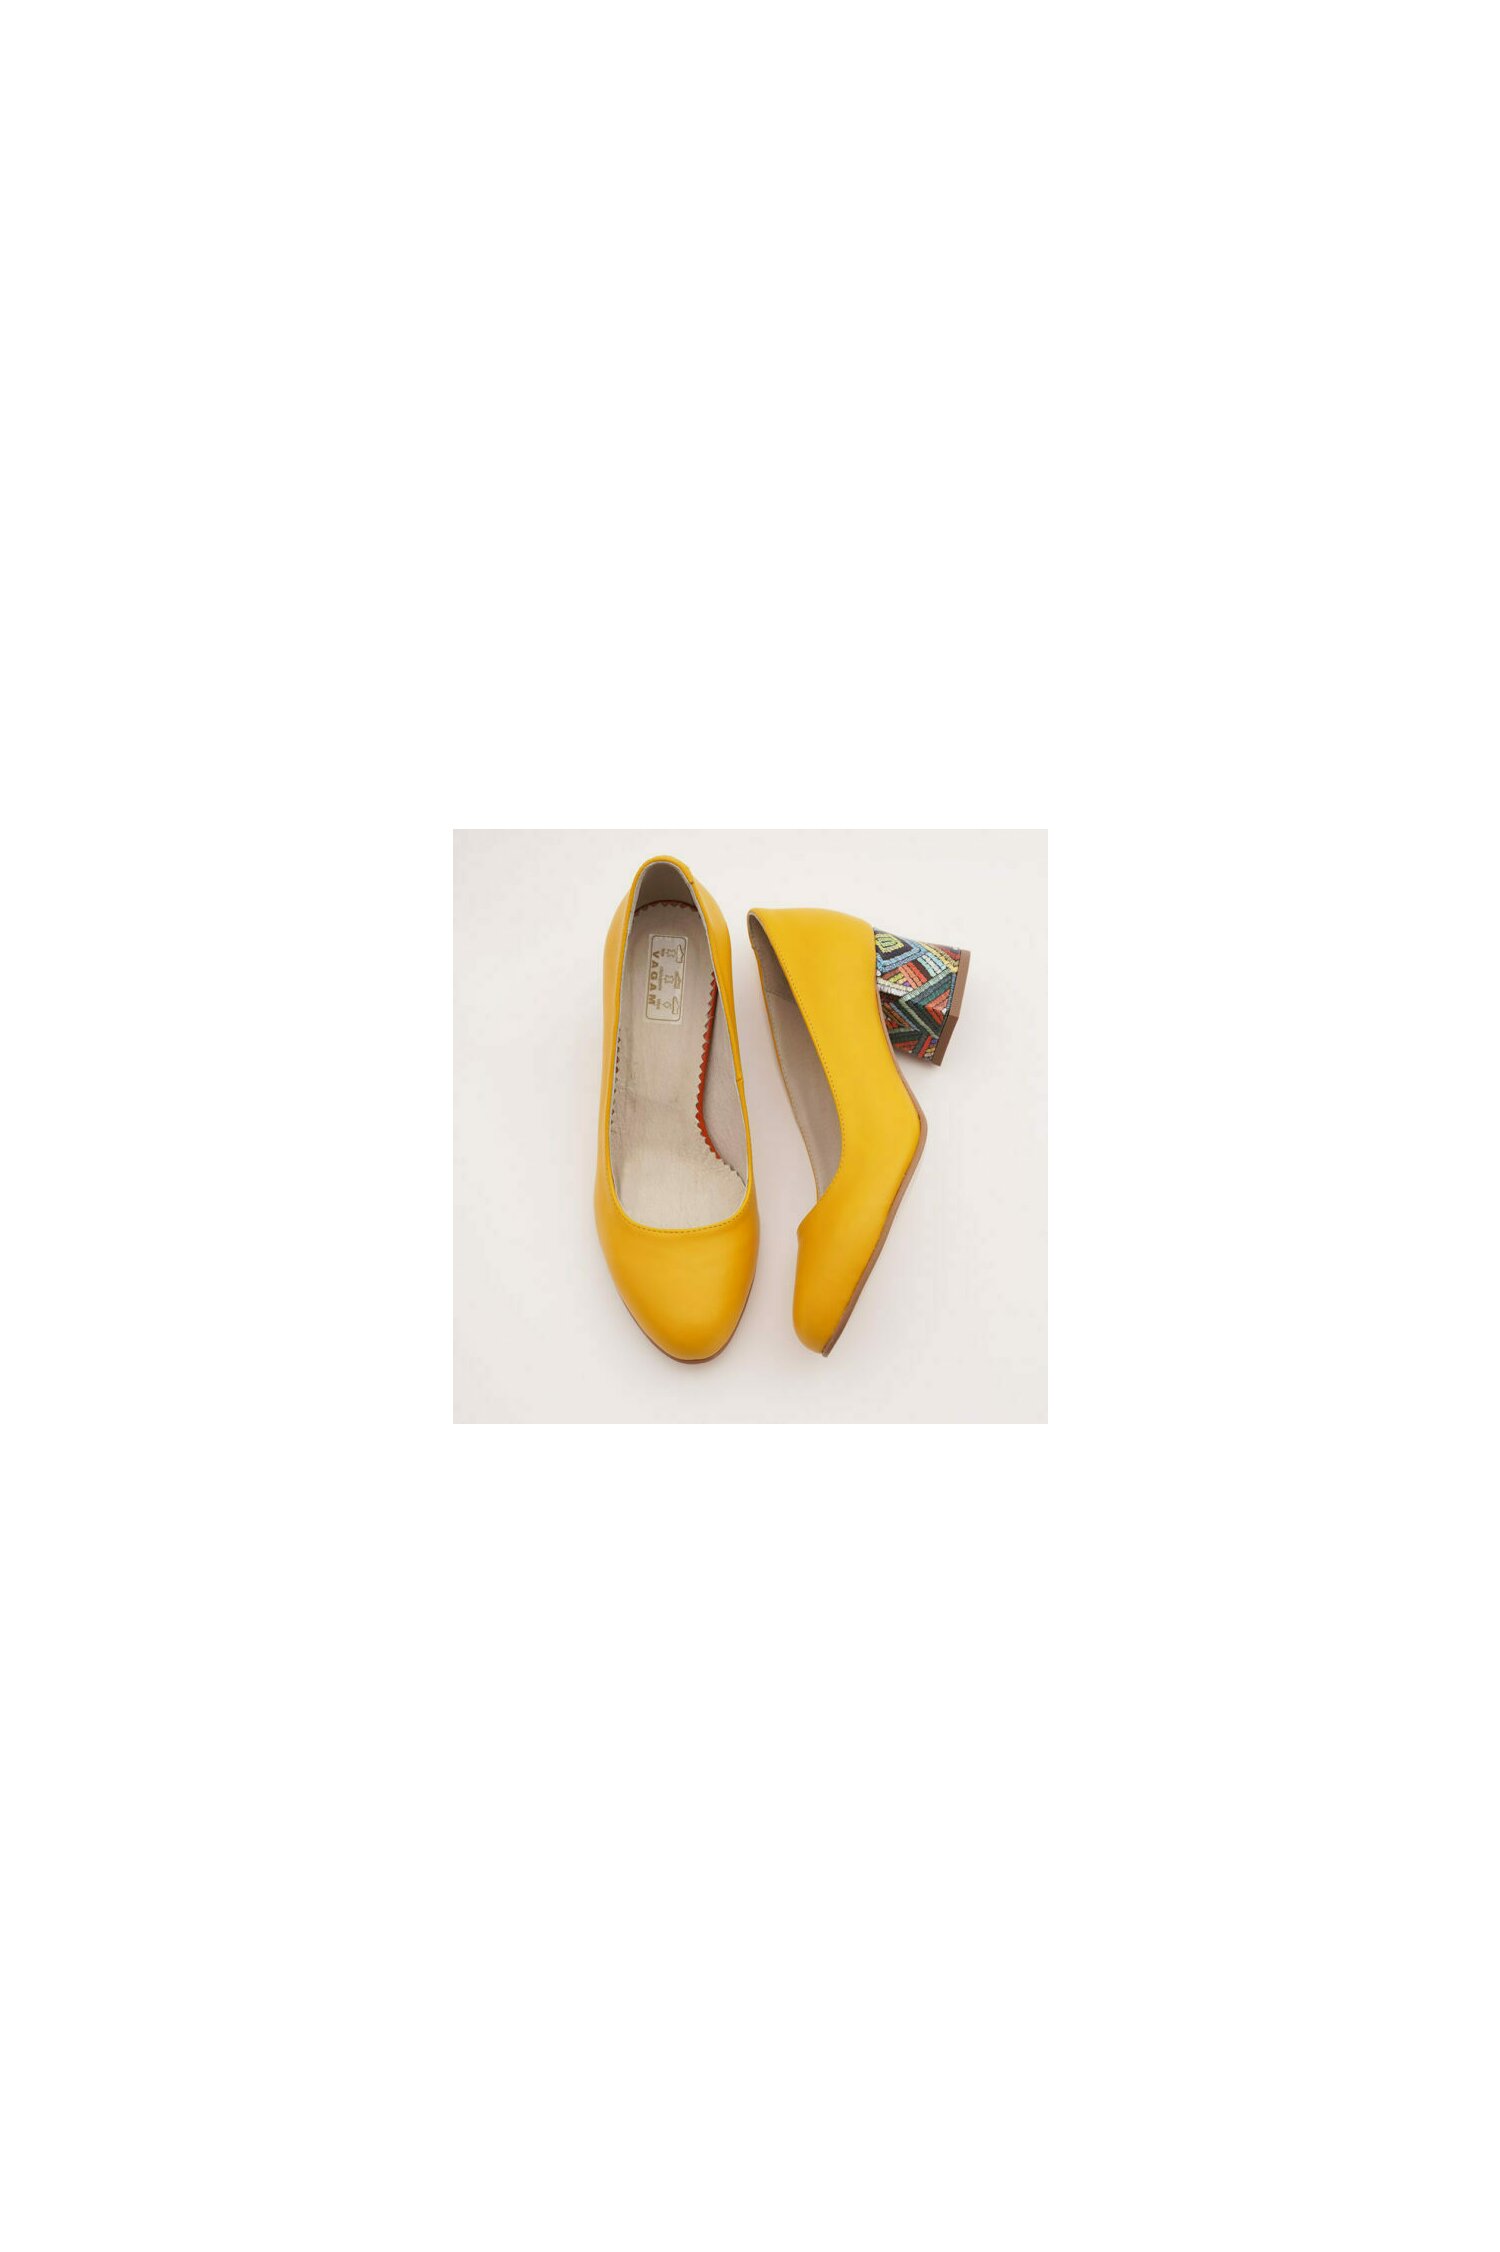 Pantofi galbeni cu imprimeu dungat multicolor pe toc dyfashion.ro imagine megaplaza.ro